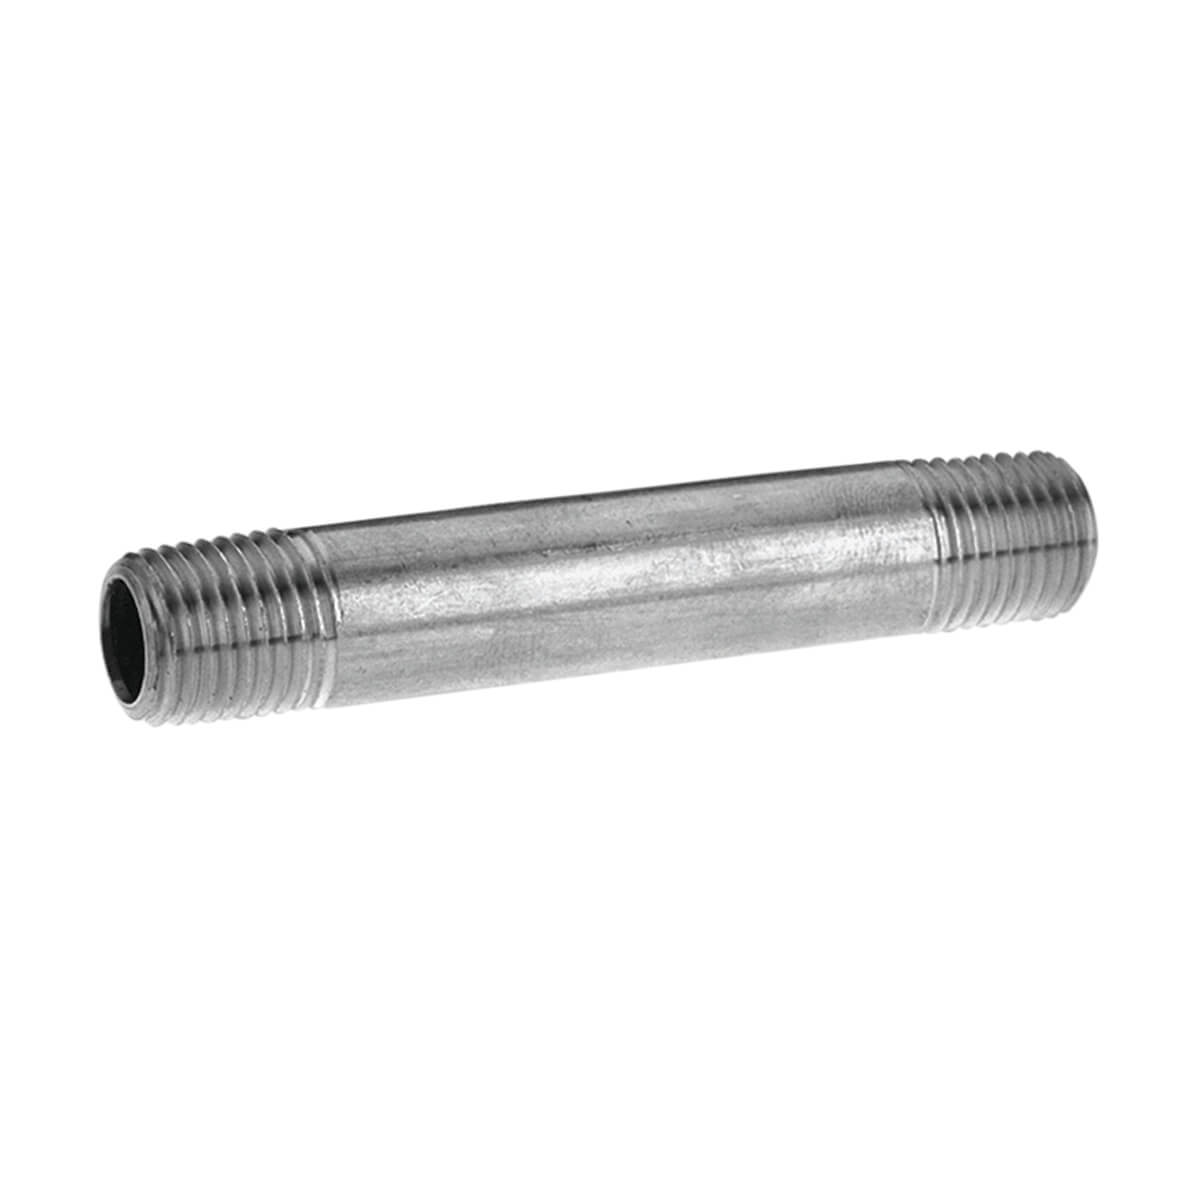 Pipe Nipple Galvanized Steel - 1/4-in x CLOSE